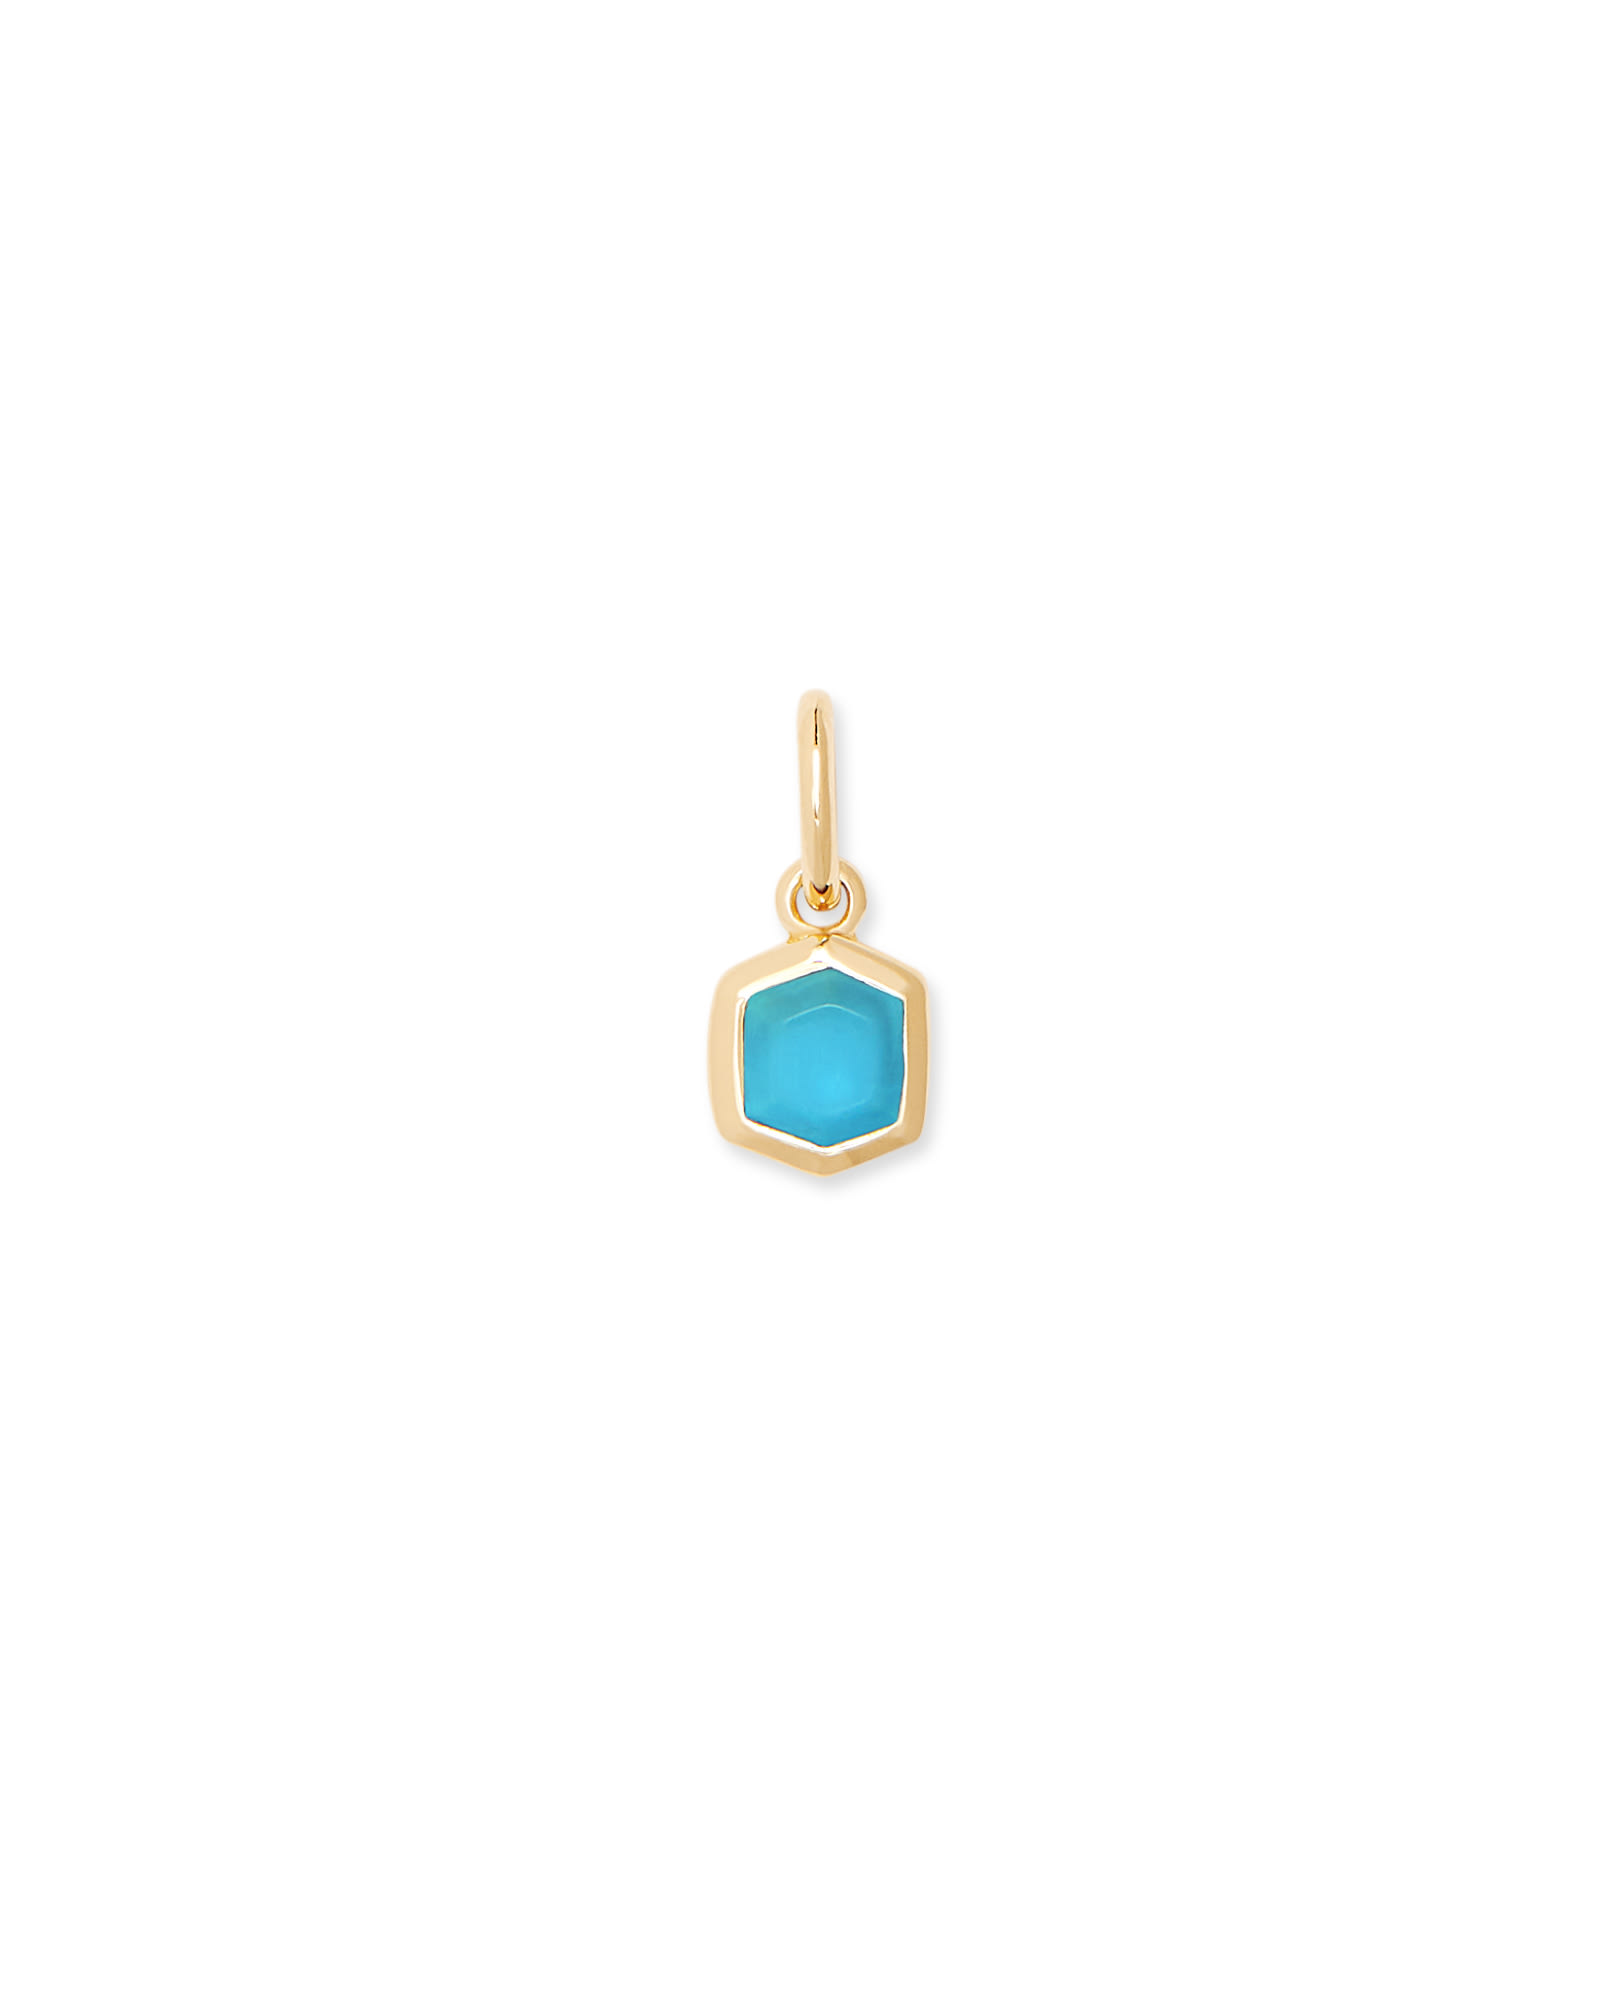 Kendra Scott Davie 18k Gold Vermeil Charm in Turquoise | Genuine Turquoise